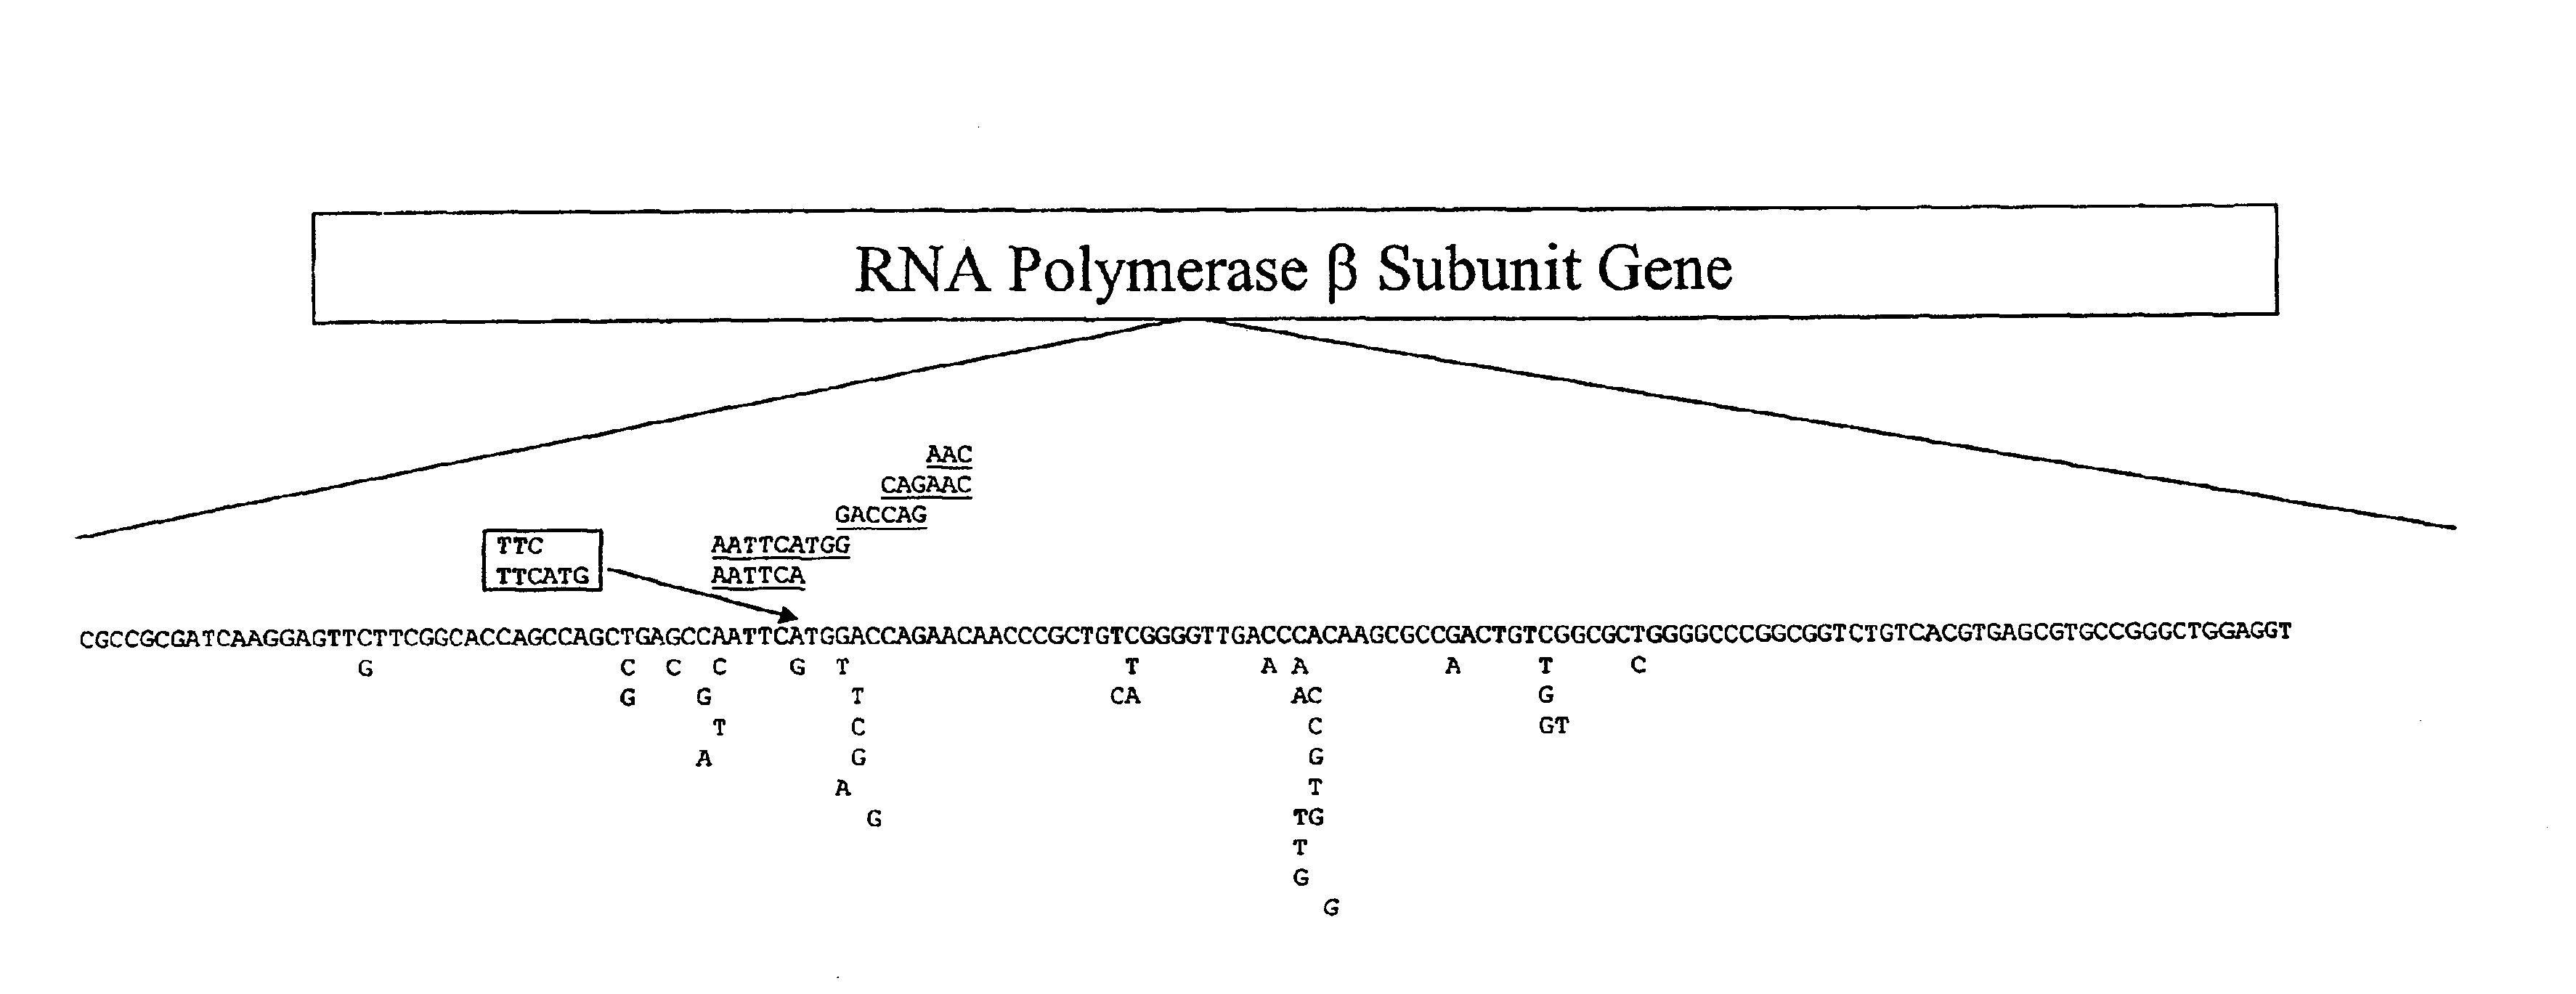 Mutation detection on RNA polmerase beta subunit gene having rifampin resistance